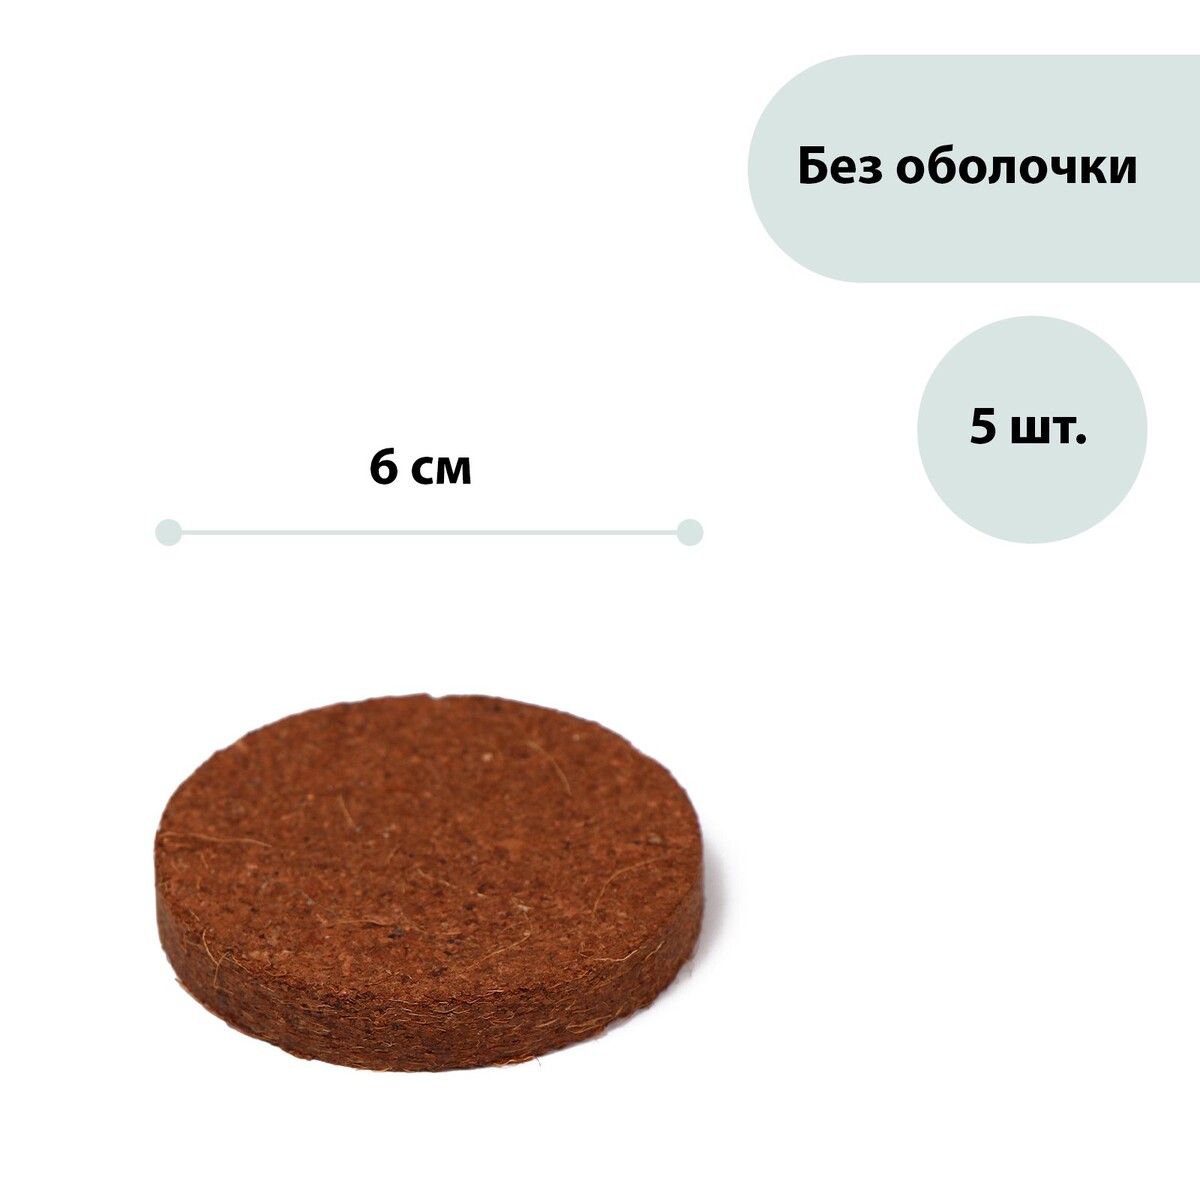 Таблетки кокосовые, d = 6 см, набор 5 шт., без оболочки, greengo бруфен ср таблетки 800мг 28